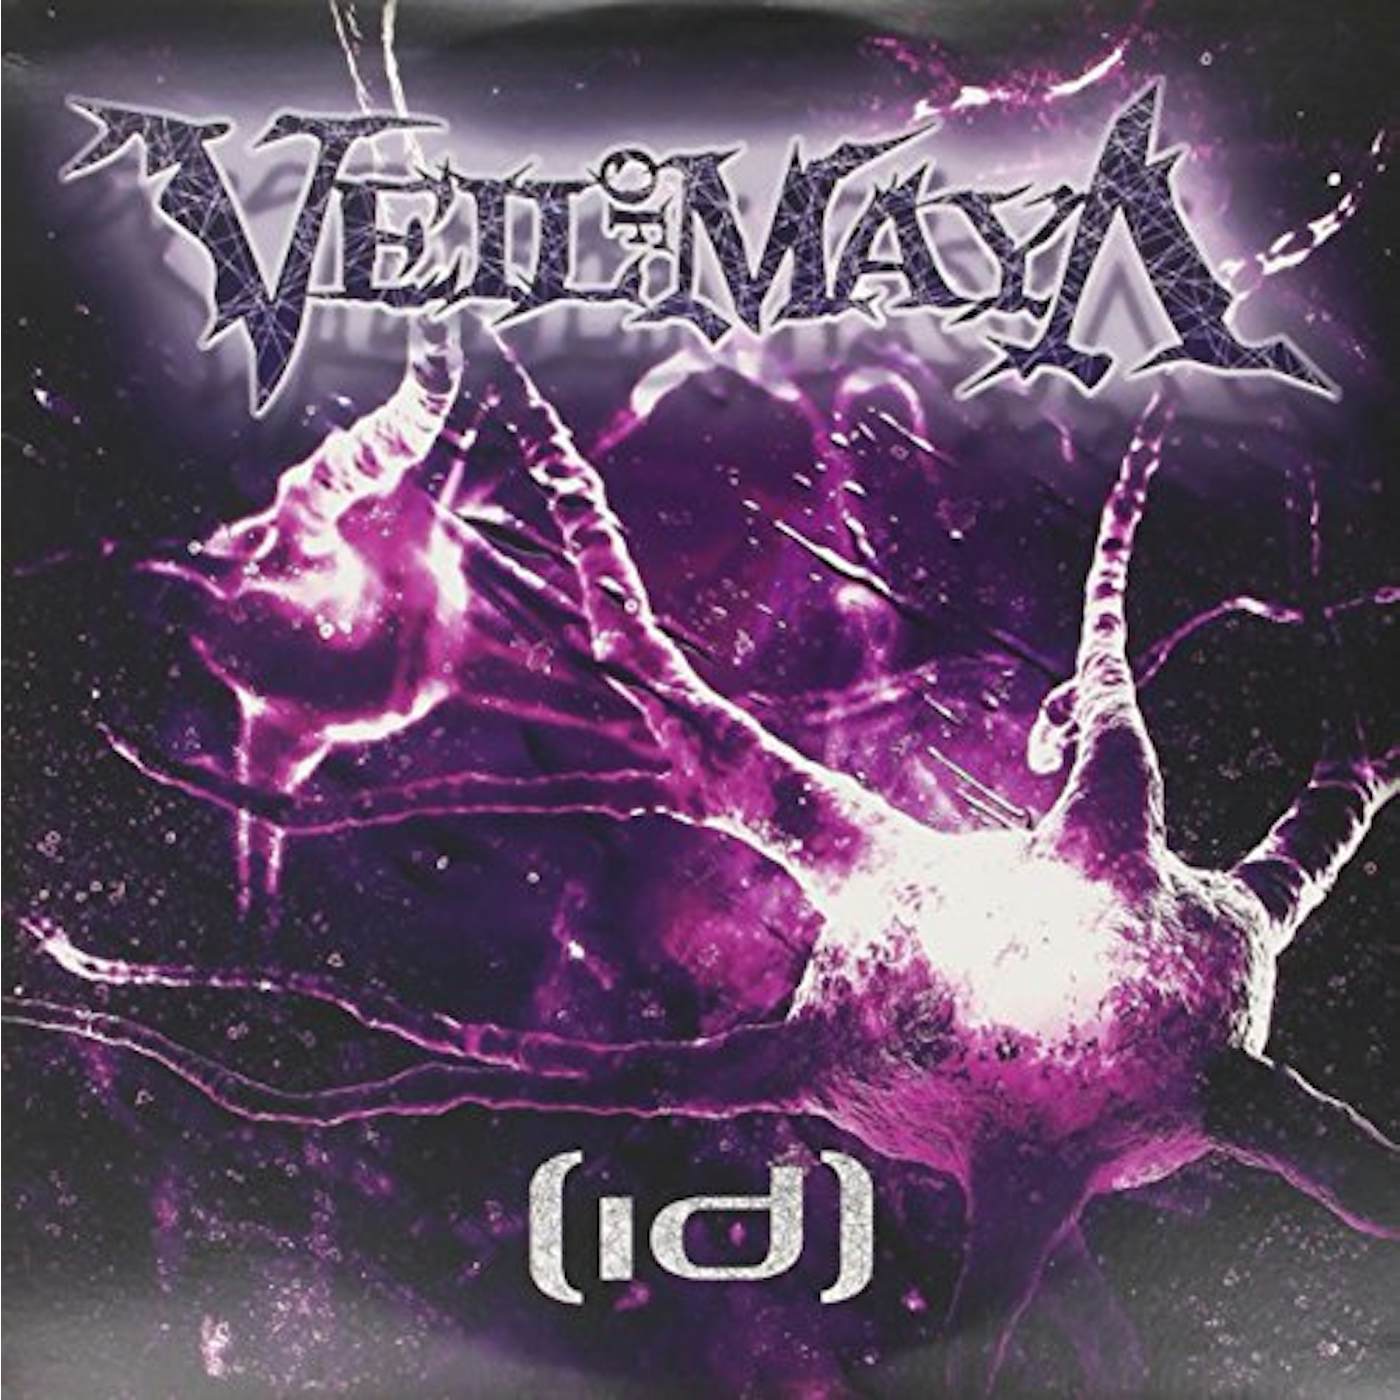 Veil Of Maya ID Vinyl Record